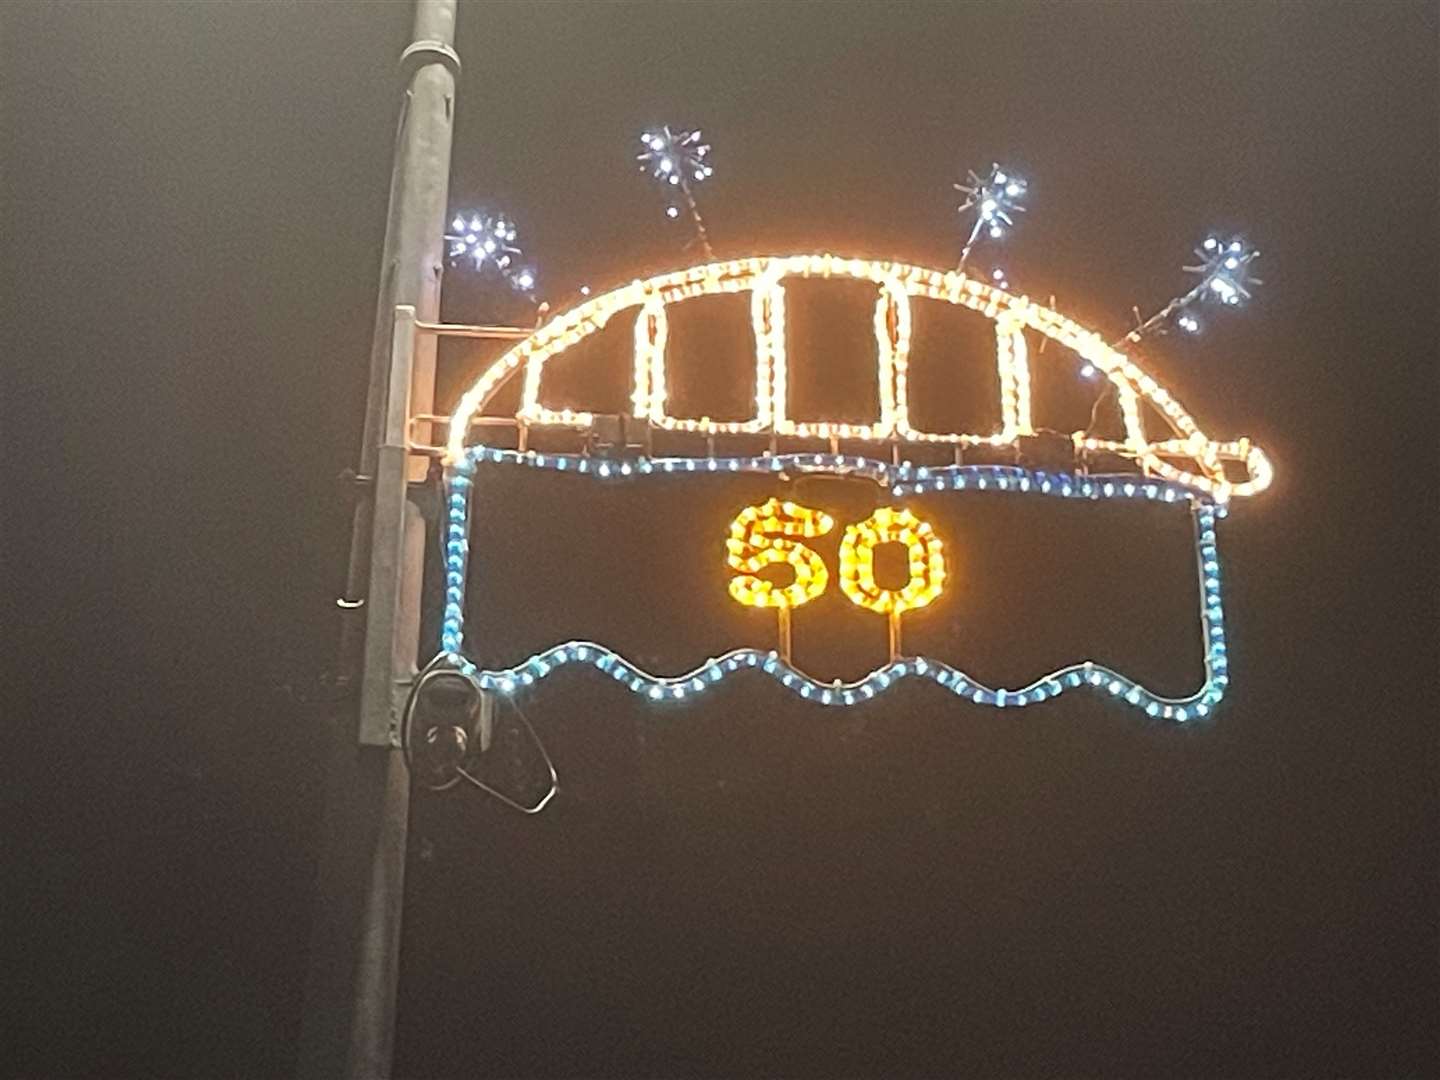 A new Christmas light marking the 50th anniversary of Bonar bridge.